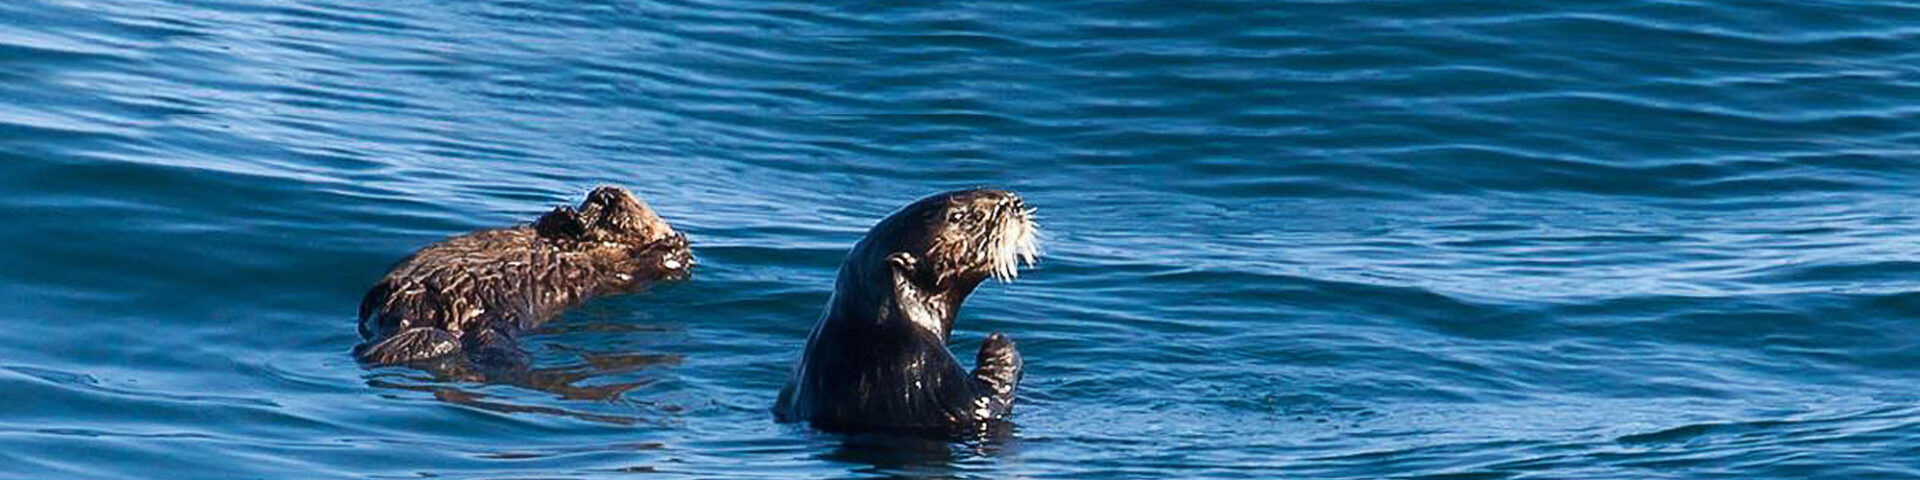 sea-otter-hero - Wild Animal Health Fund